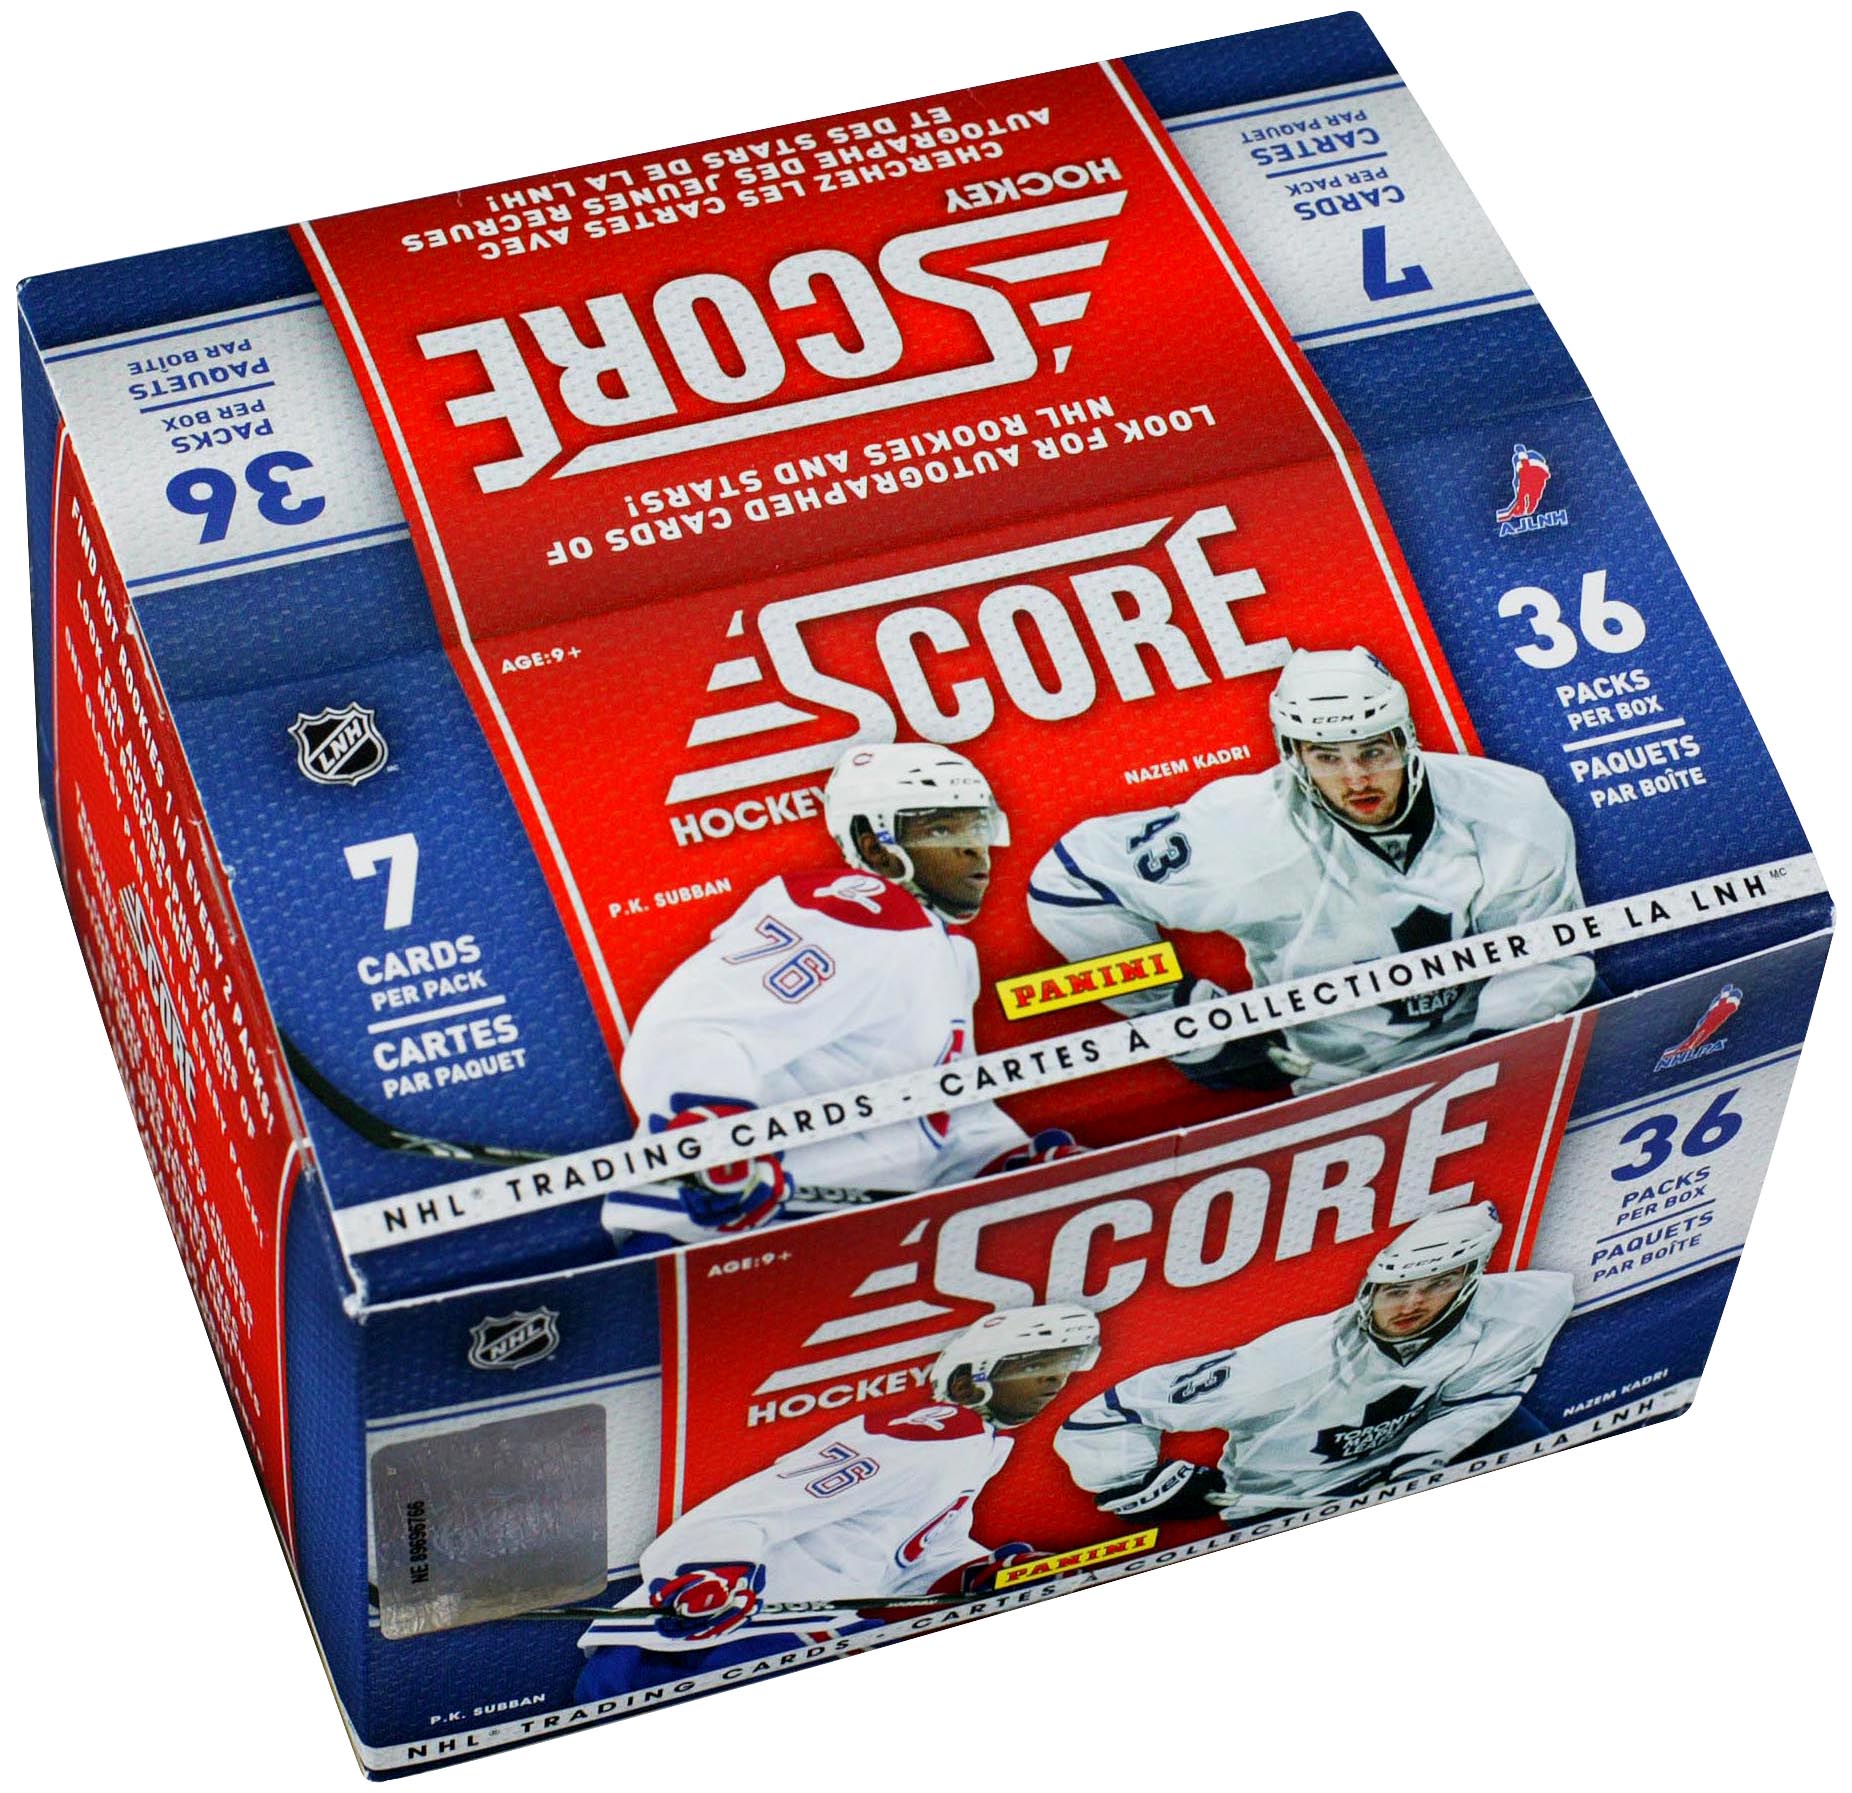 2010-11 Score Hockey Retail Box card image